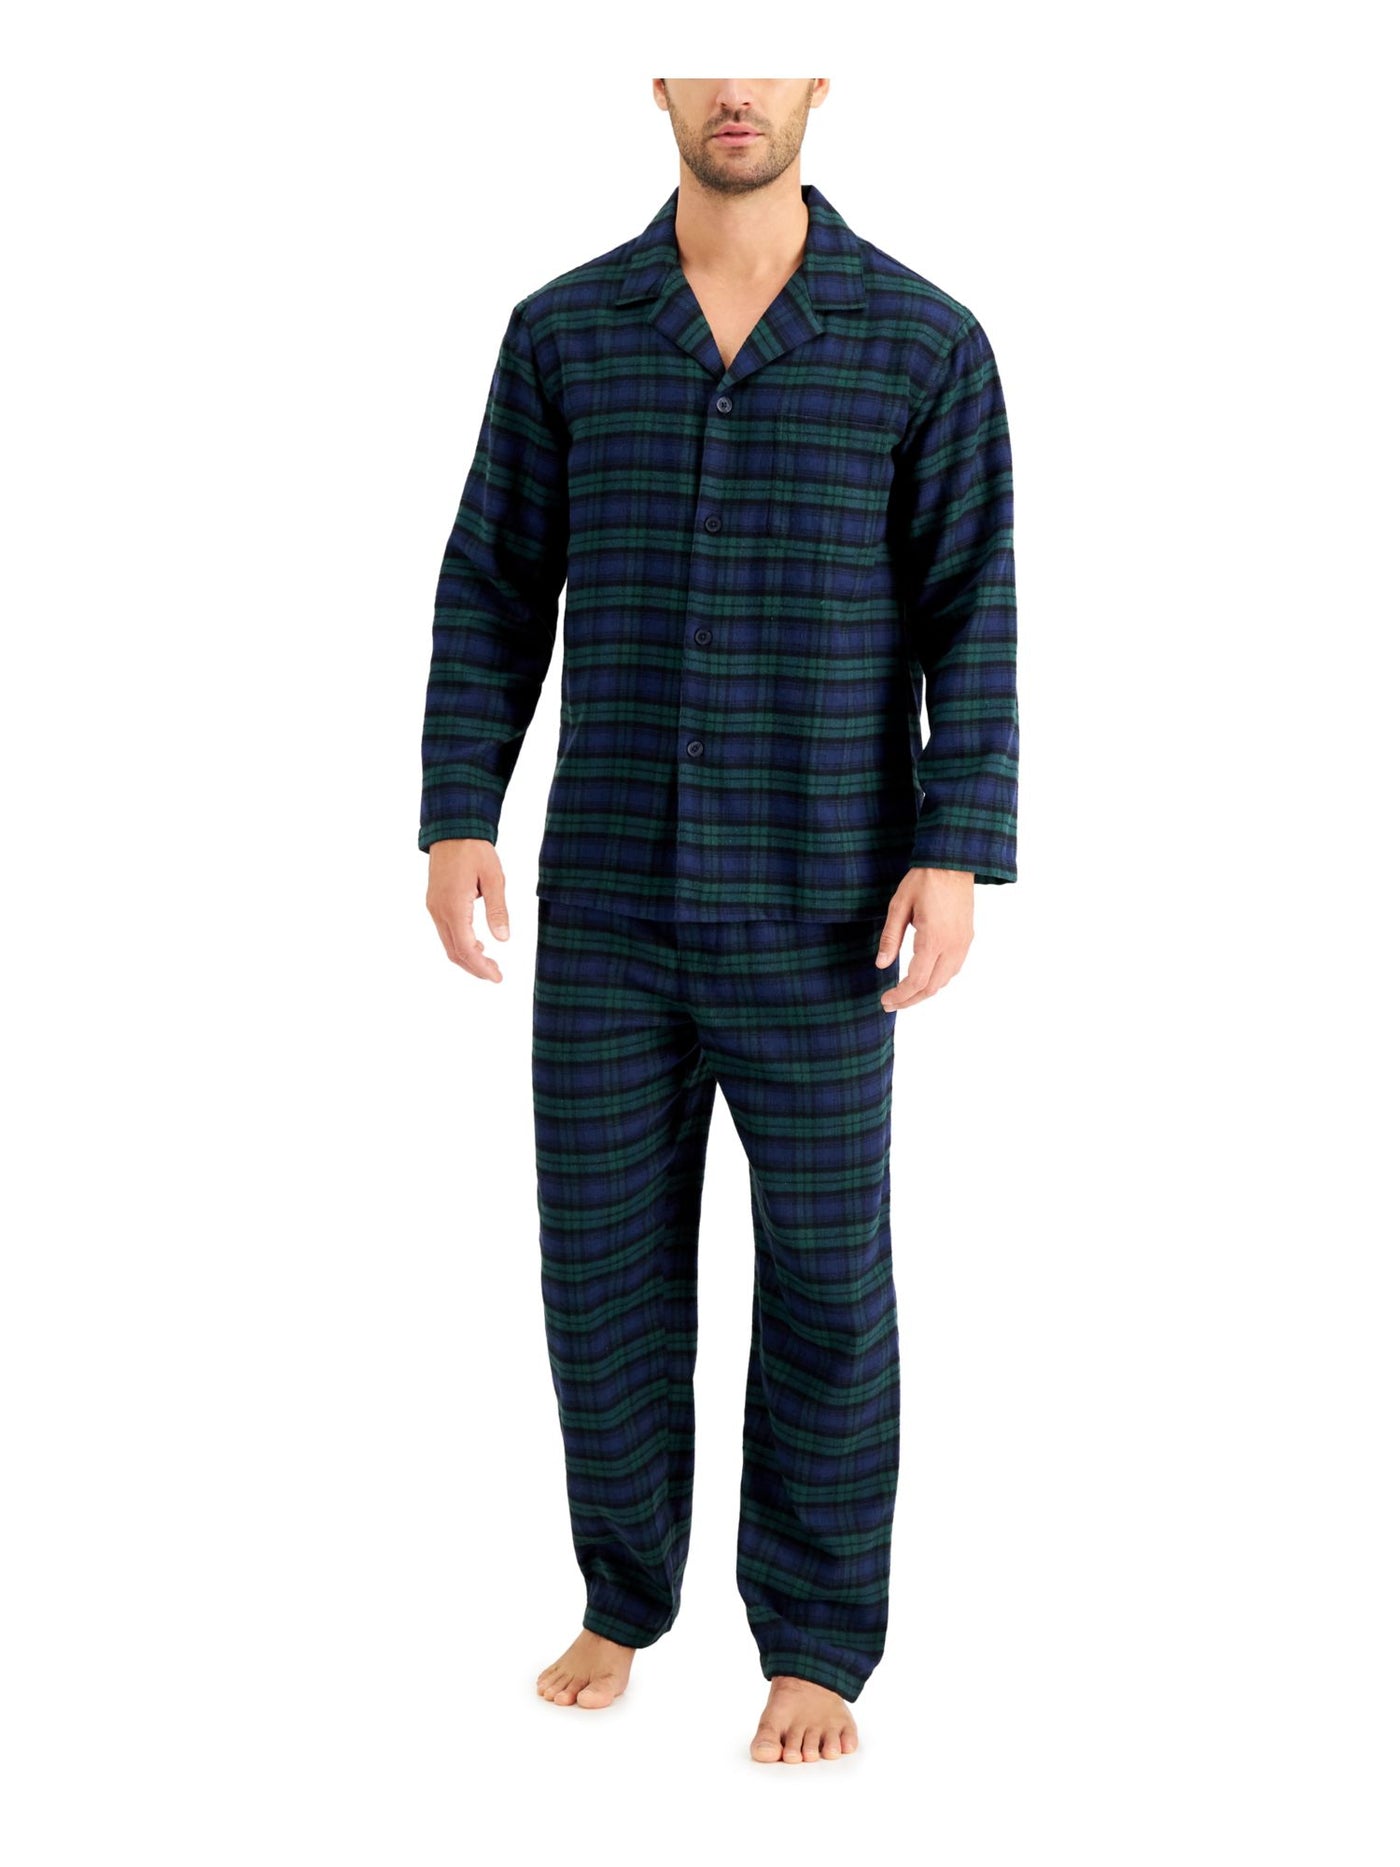 CLUBROOM Mens Green Plaid Drawstring Long Sleeve Button Up Top Straight leg Pants Pajamas L